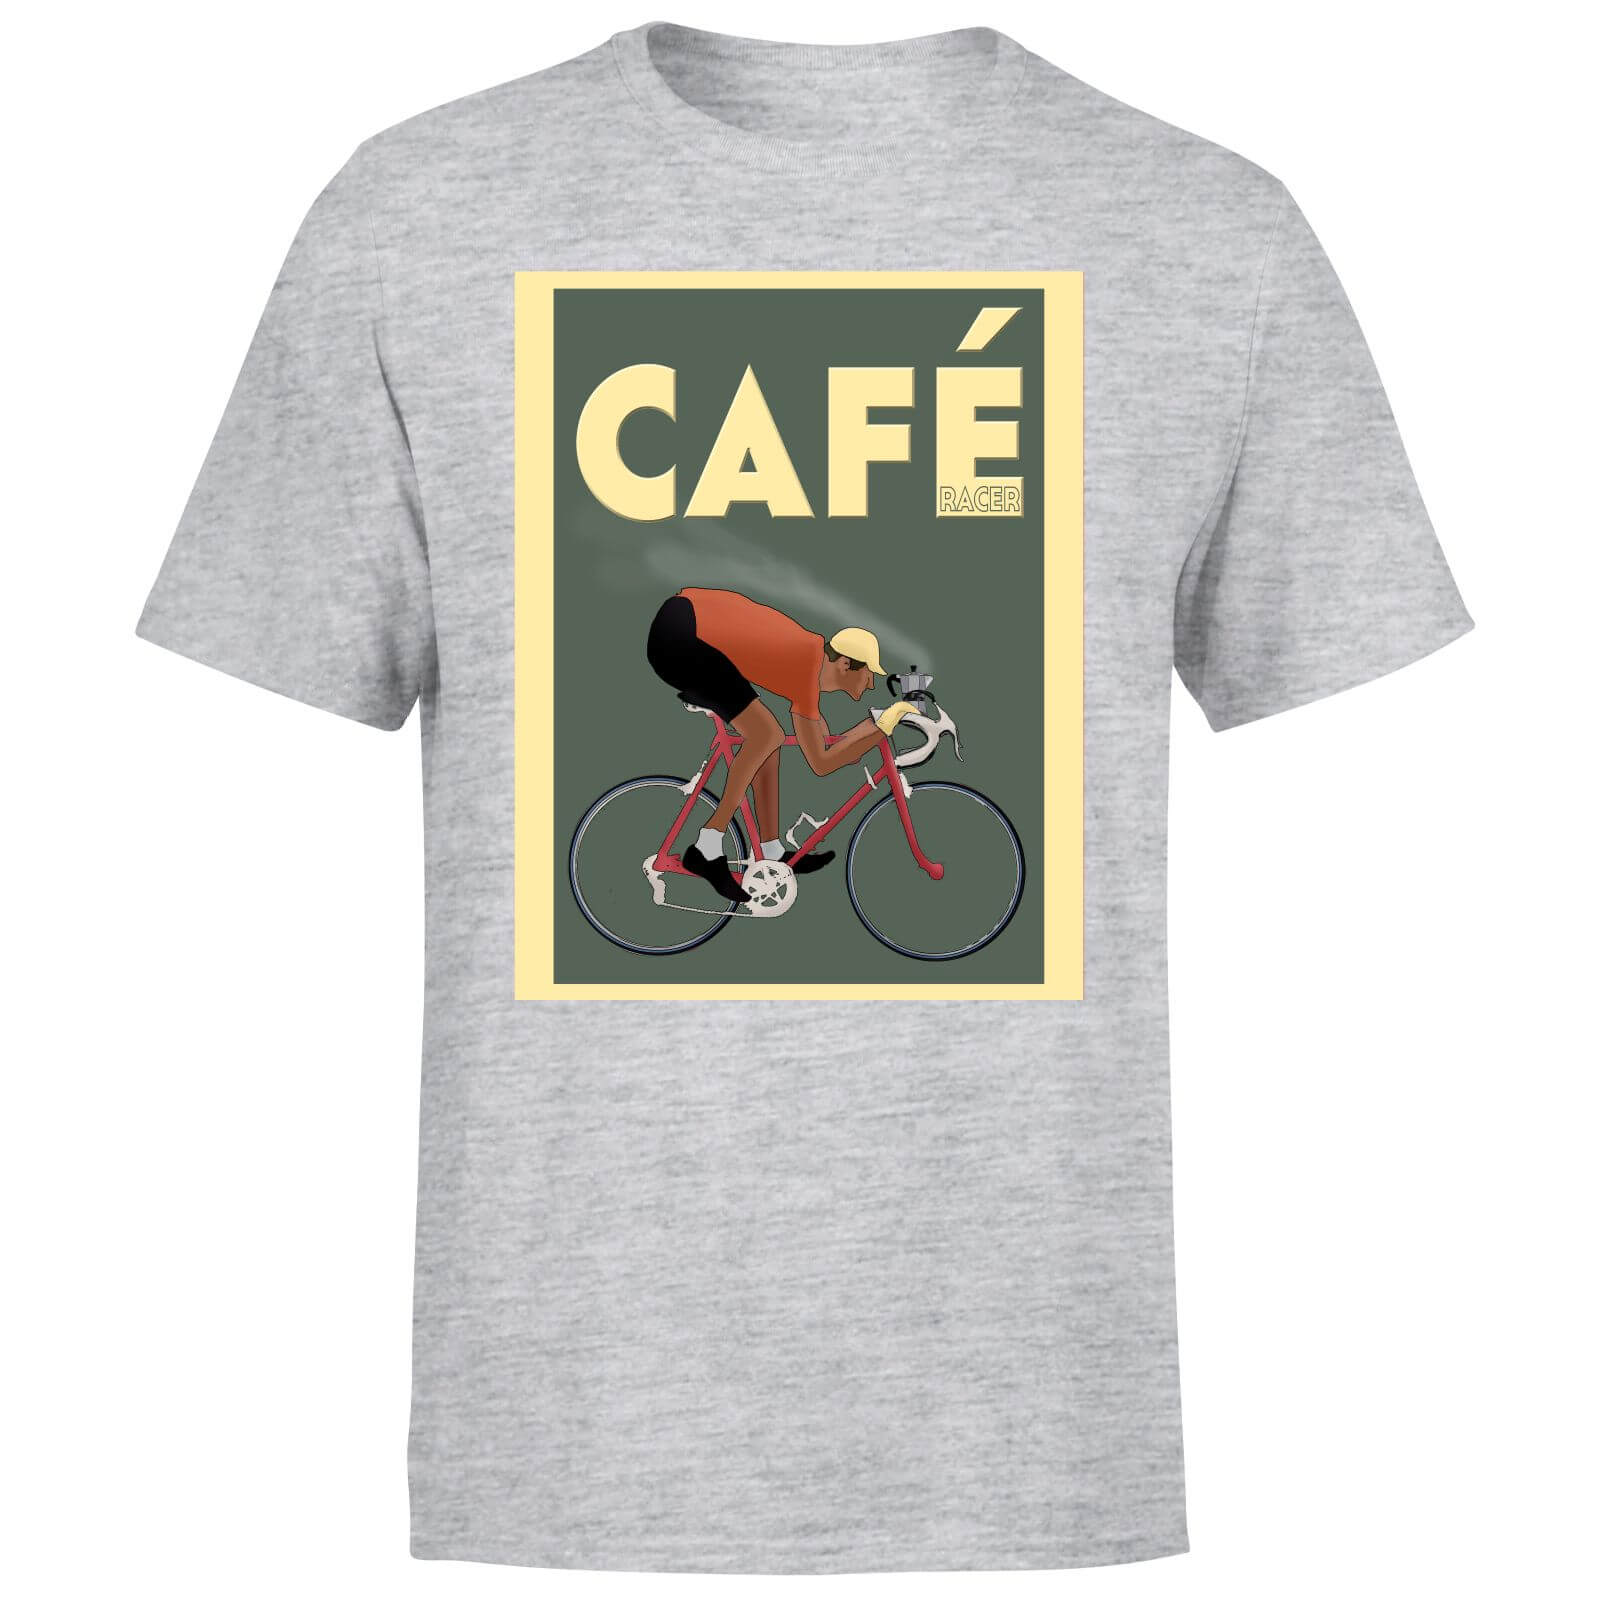 Cafe Racer Men's T-Shirt - Grey - M - Grey